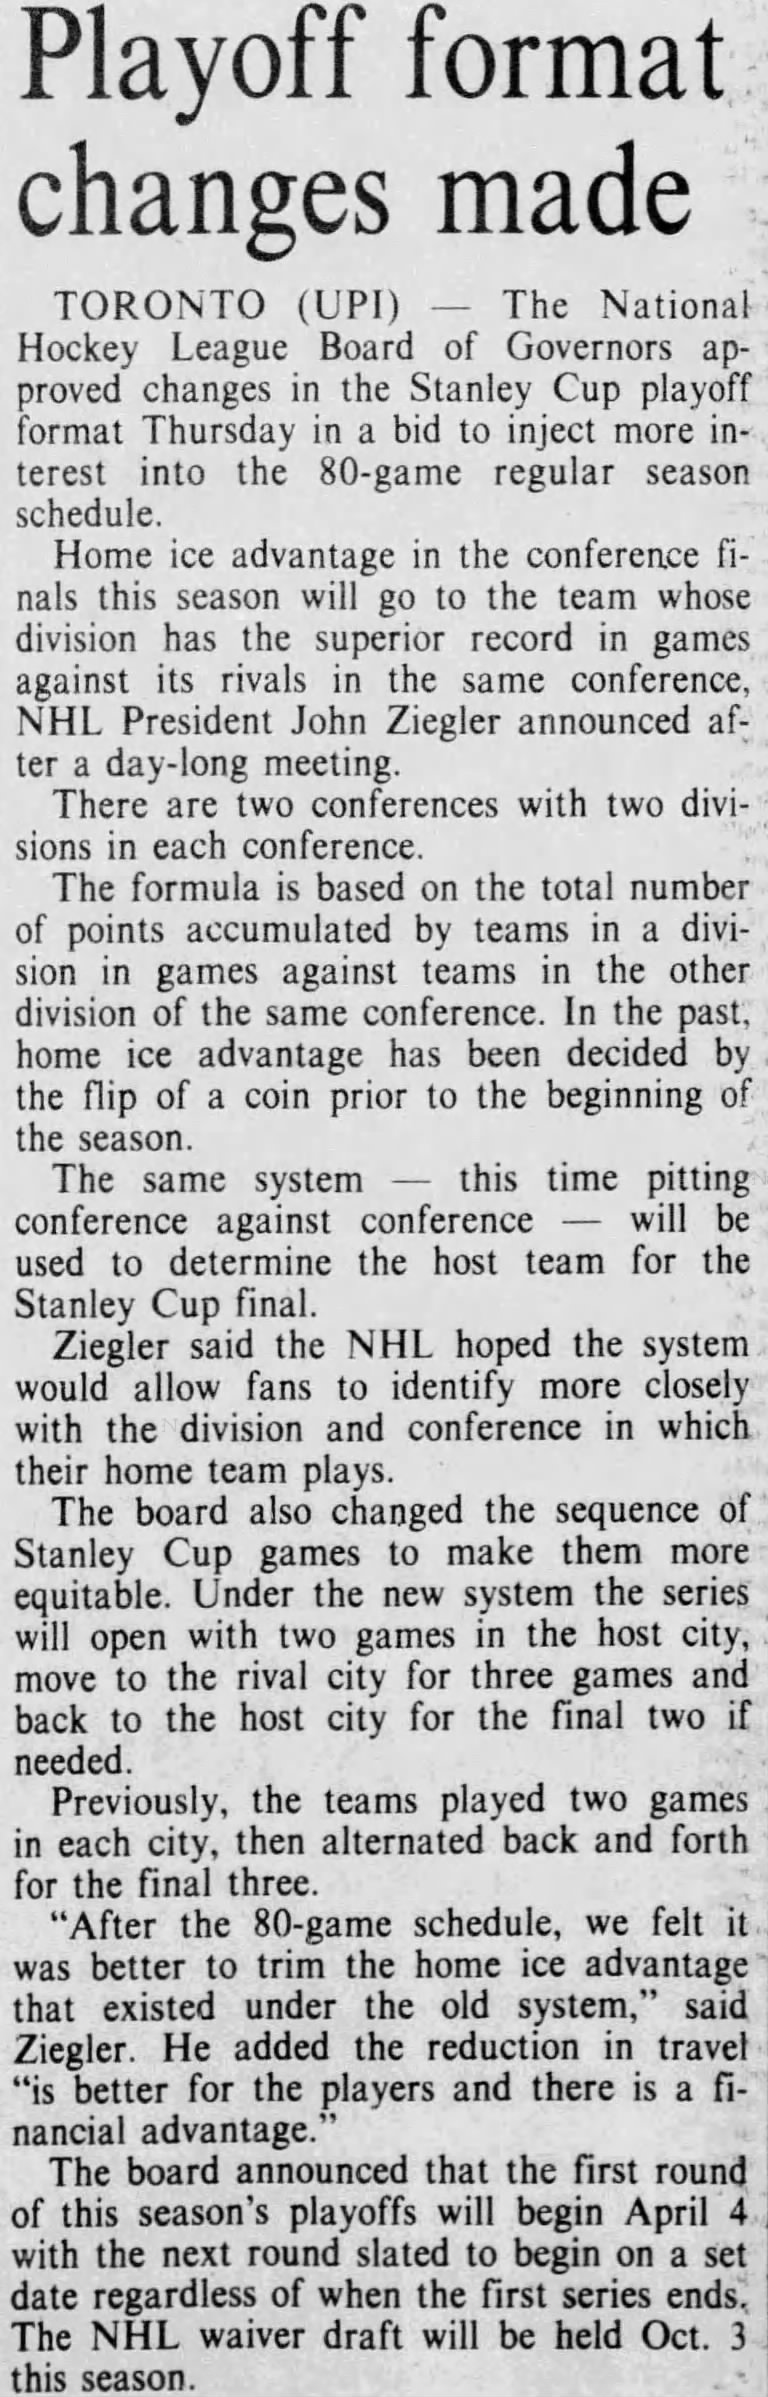 1984 NHL Playoff format
- 2-3-2